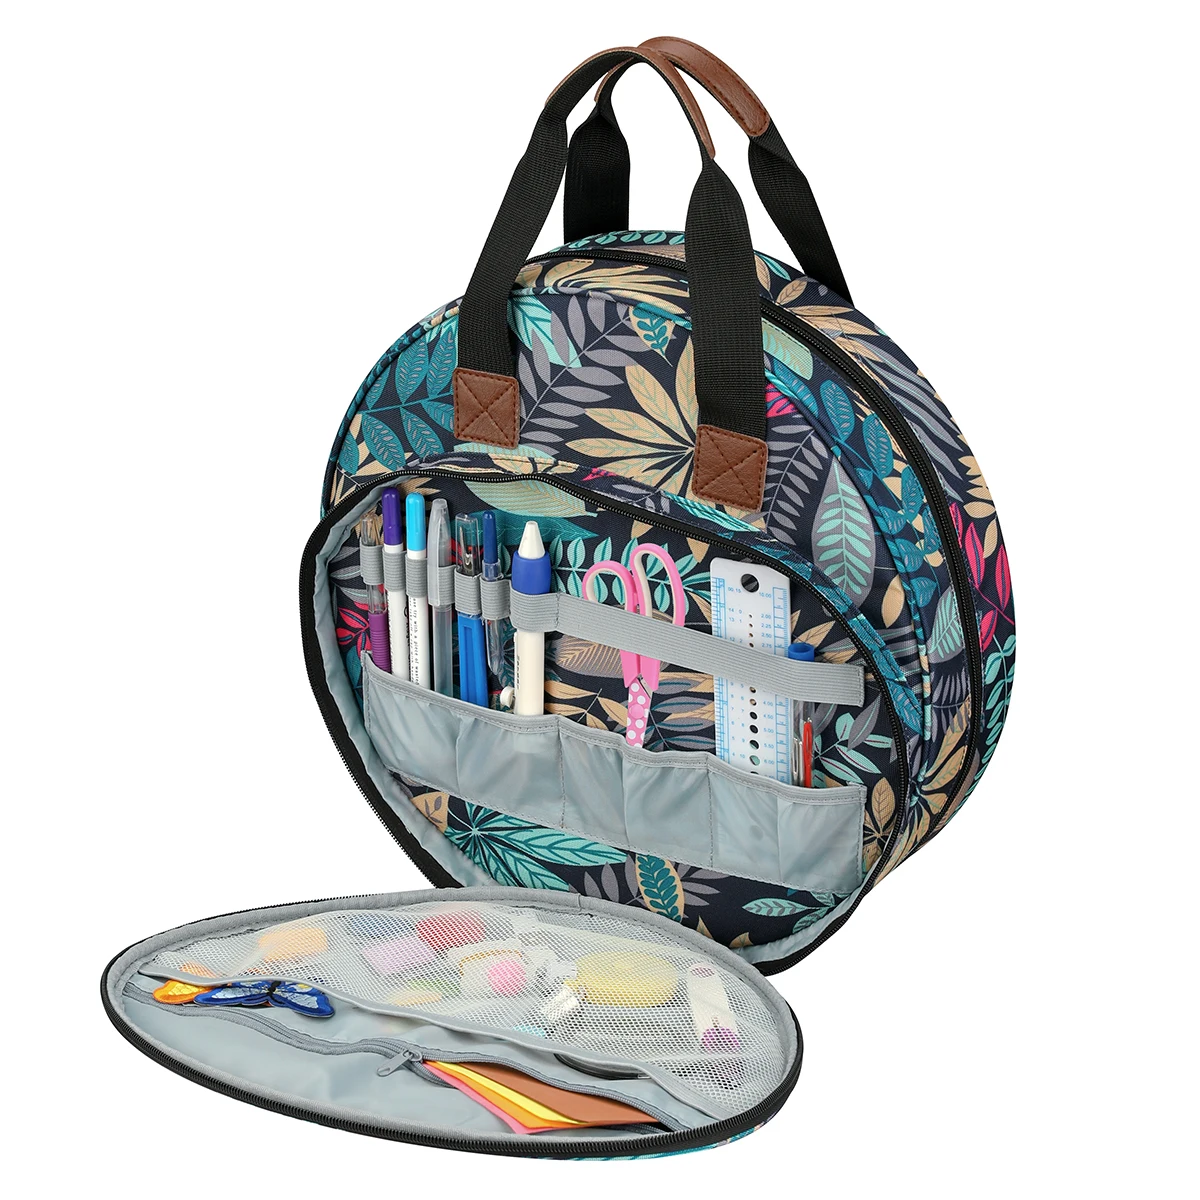 Bolsa de hilo de bordar con Hojas de arce, bolsa circular bordada redonda, bolso de mano de punto de Color azul, accesorios de costura, 2021